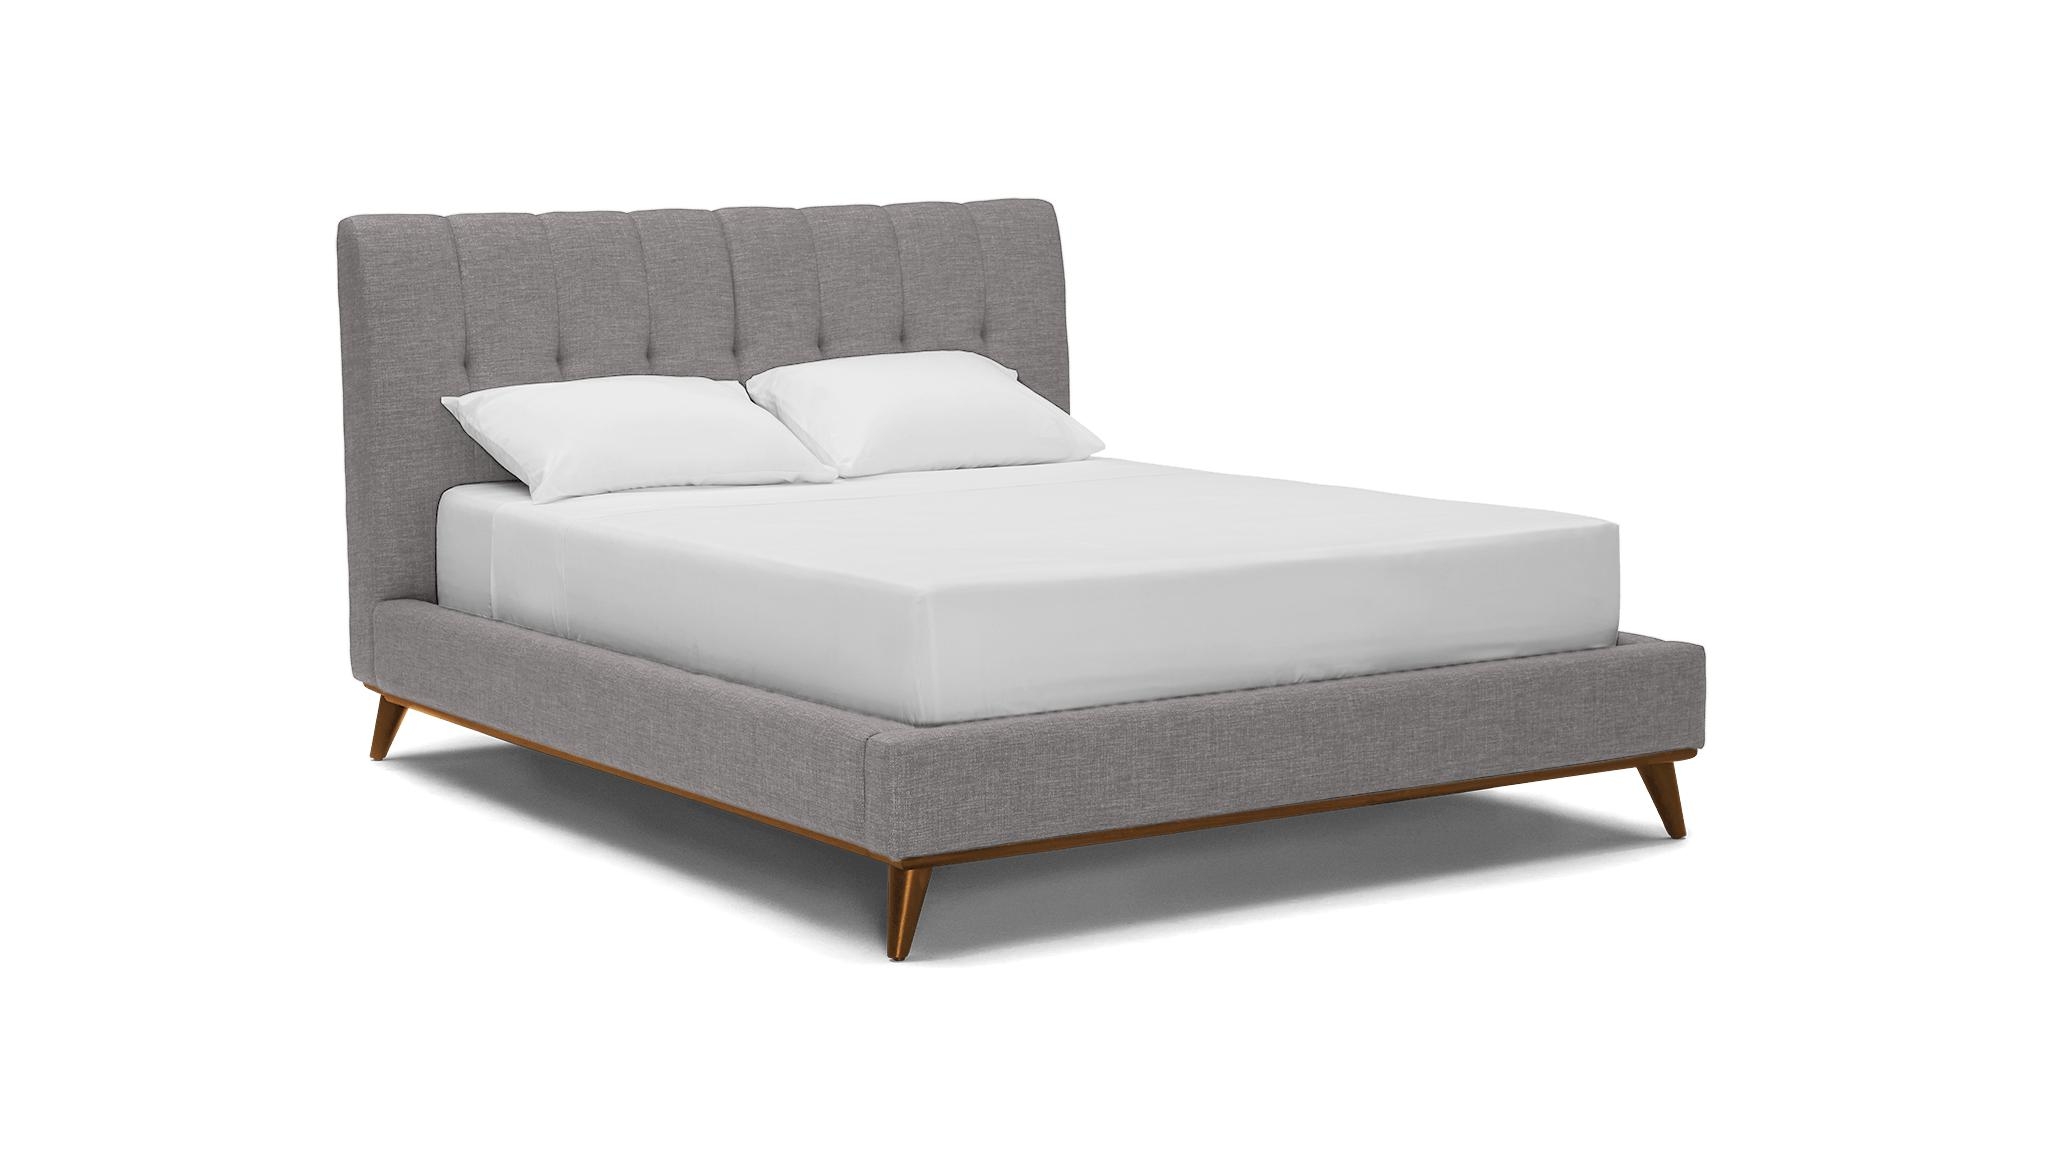 Gray Hughes Mid Century Modern Bed - Taylor Felt Grey - Mocha - Cal King - Image 1